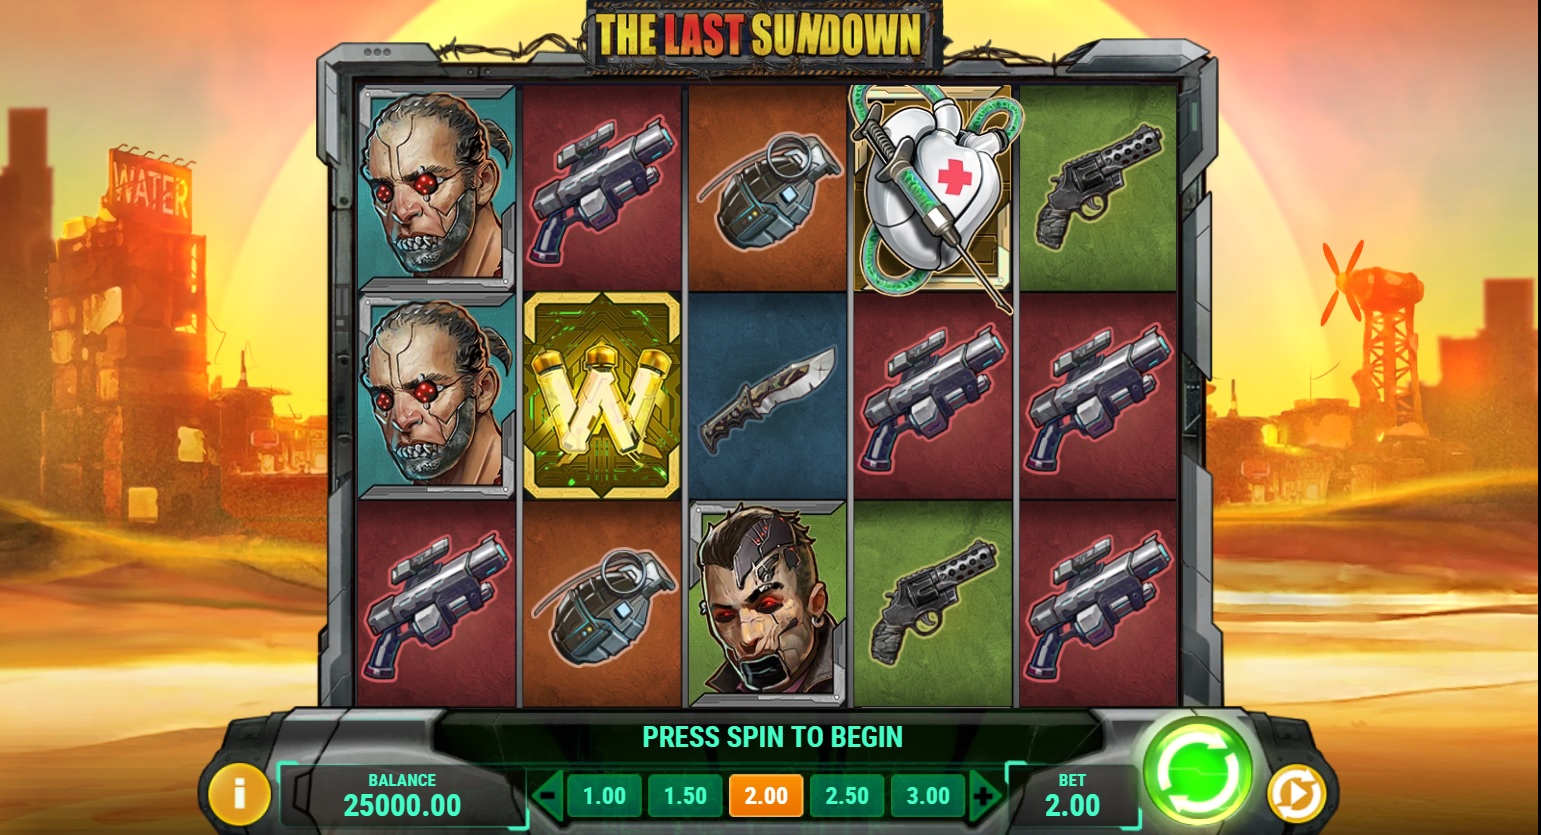 The Last Sundown, base slot game